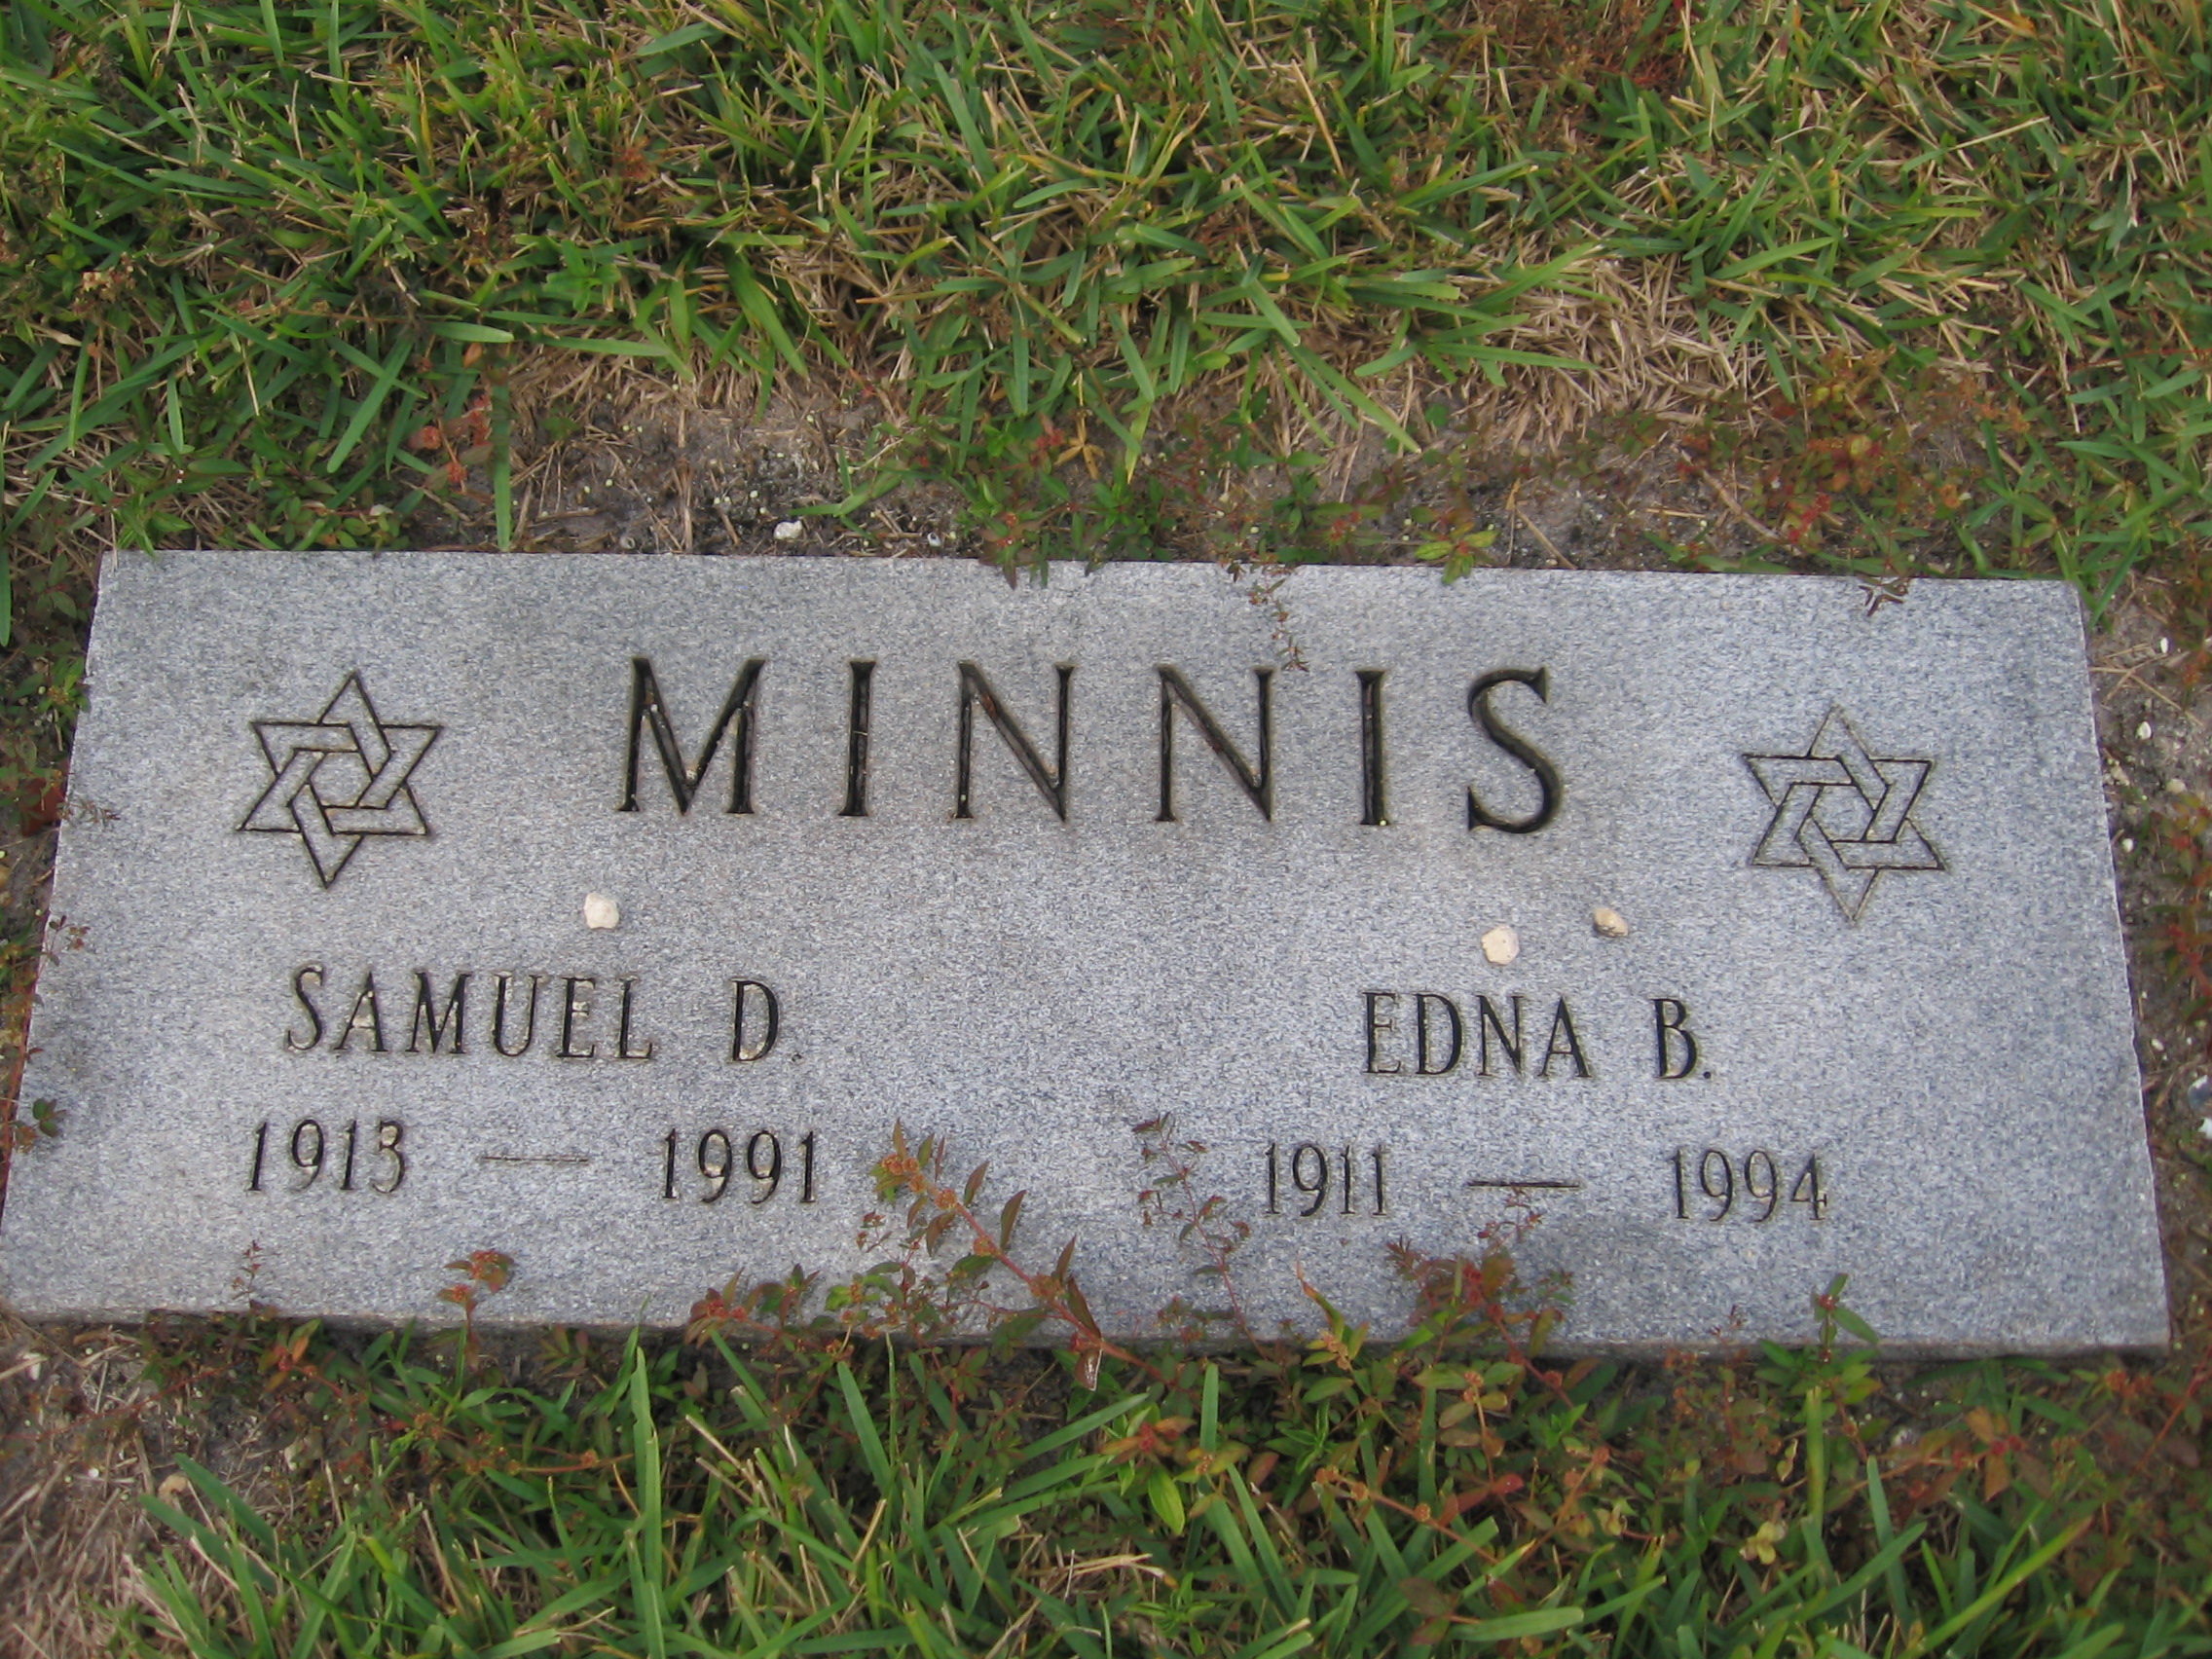 Samuel D Minnis